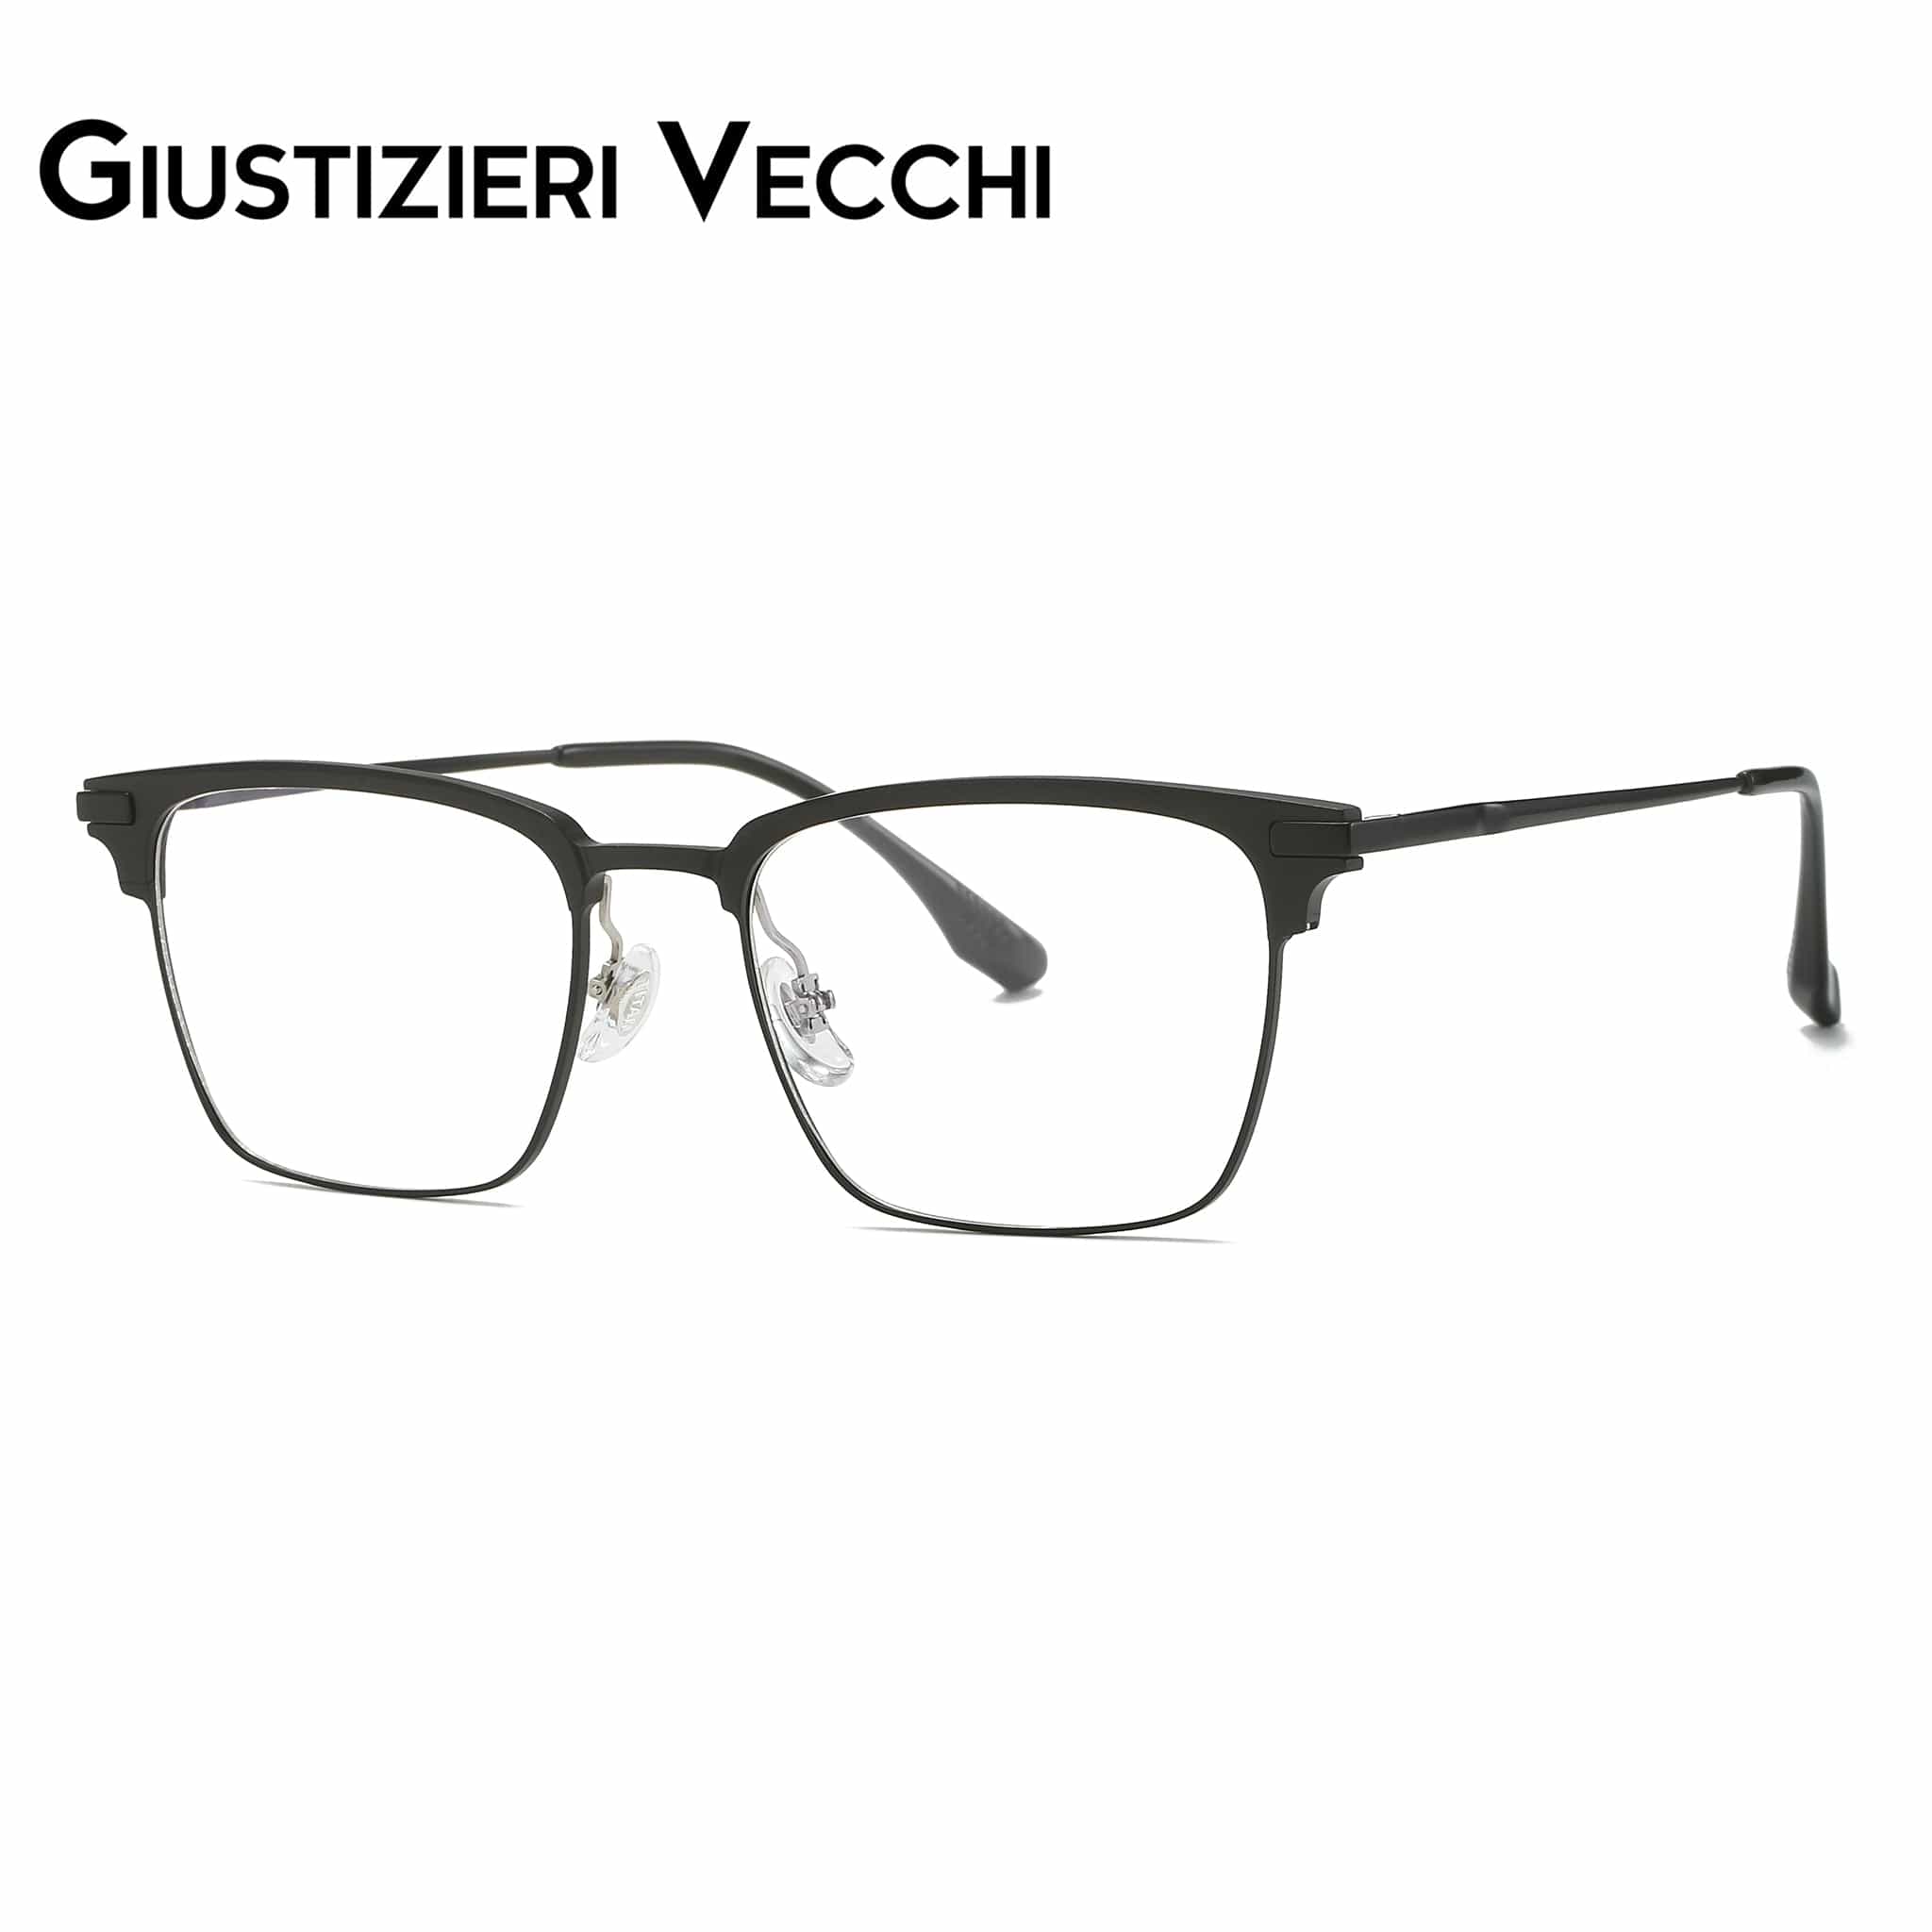 GIUSTIZIERI VECCHI Eyeglasses Wildflower Uno